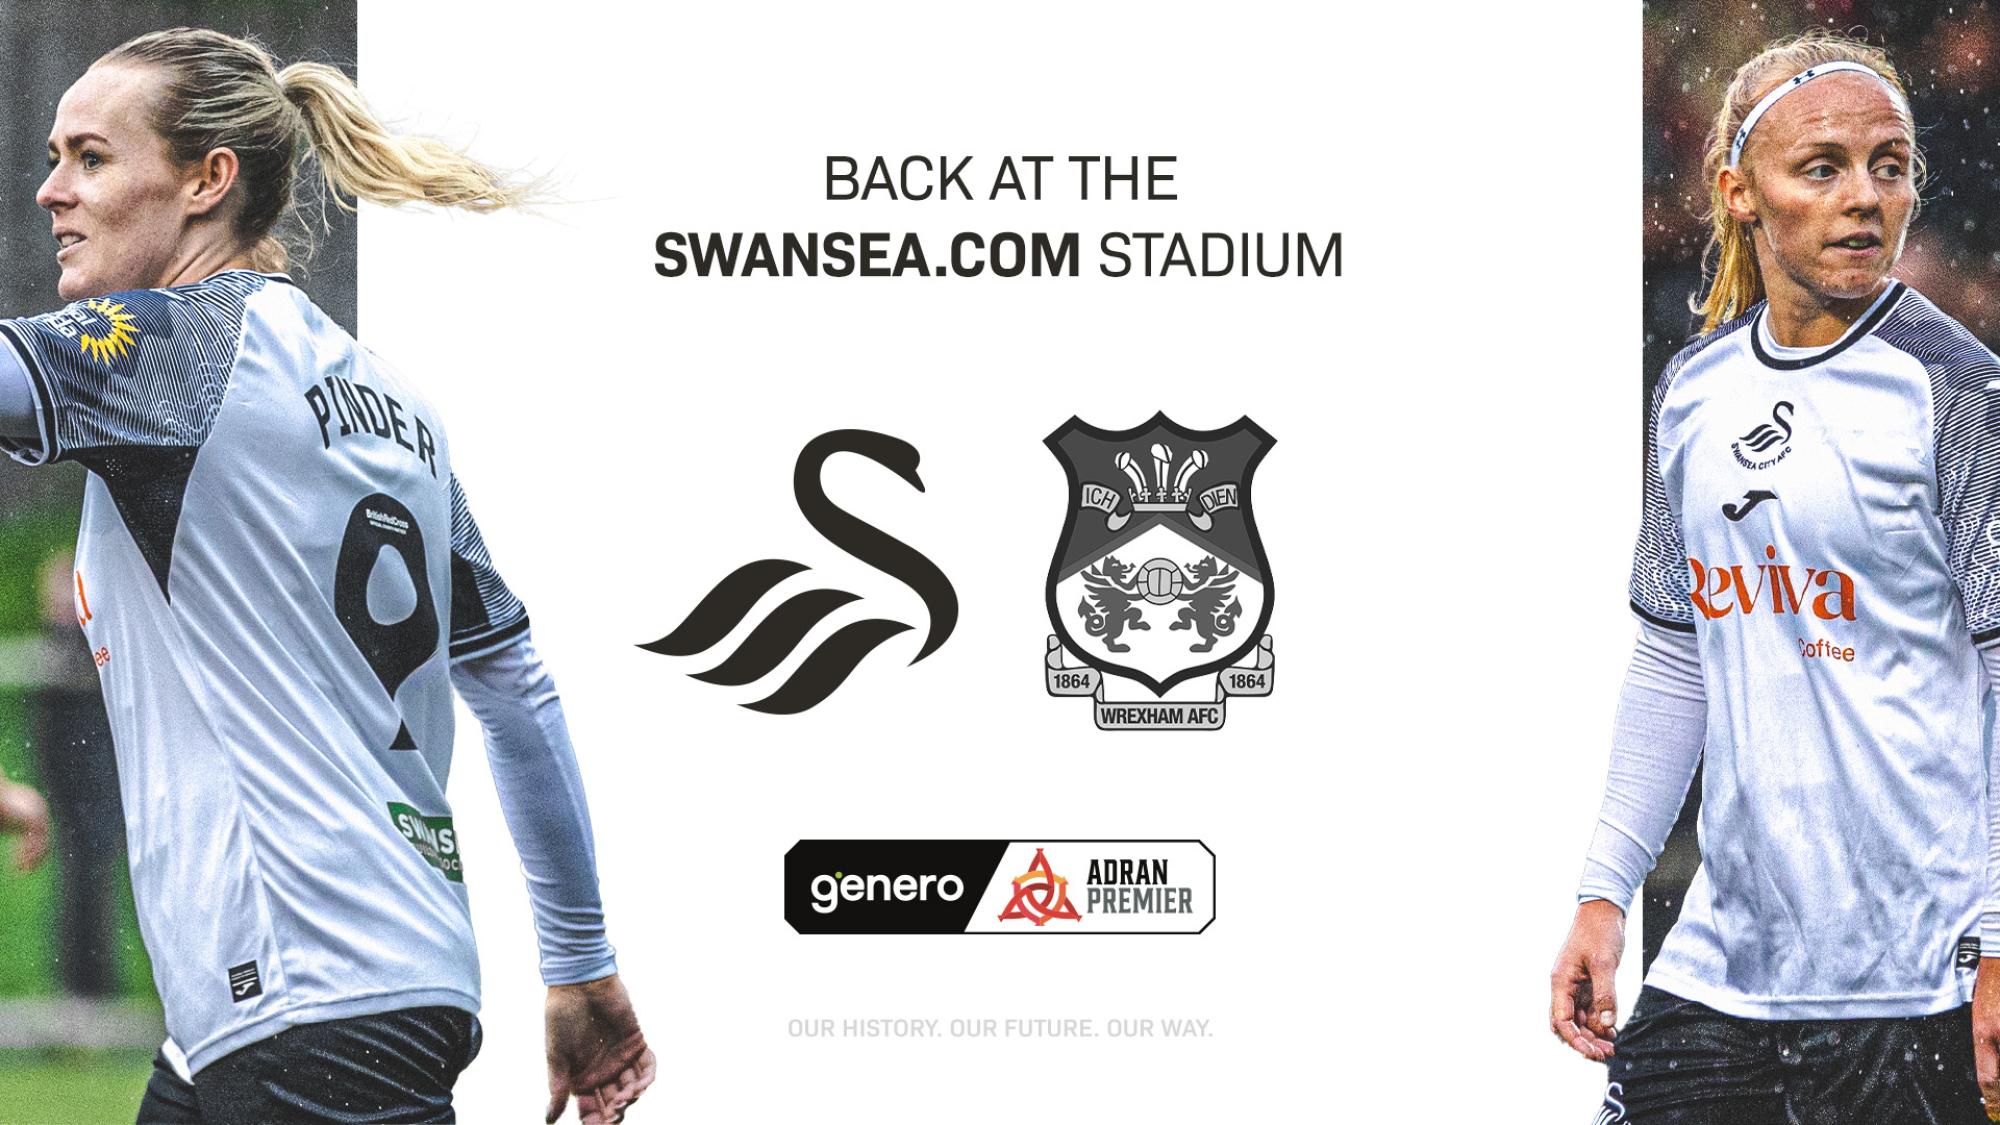 Swans Women vs Wrexham at the Swansea.com Stadium